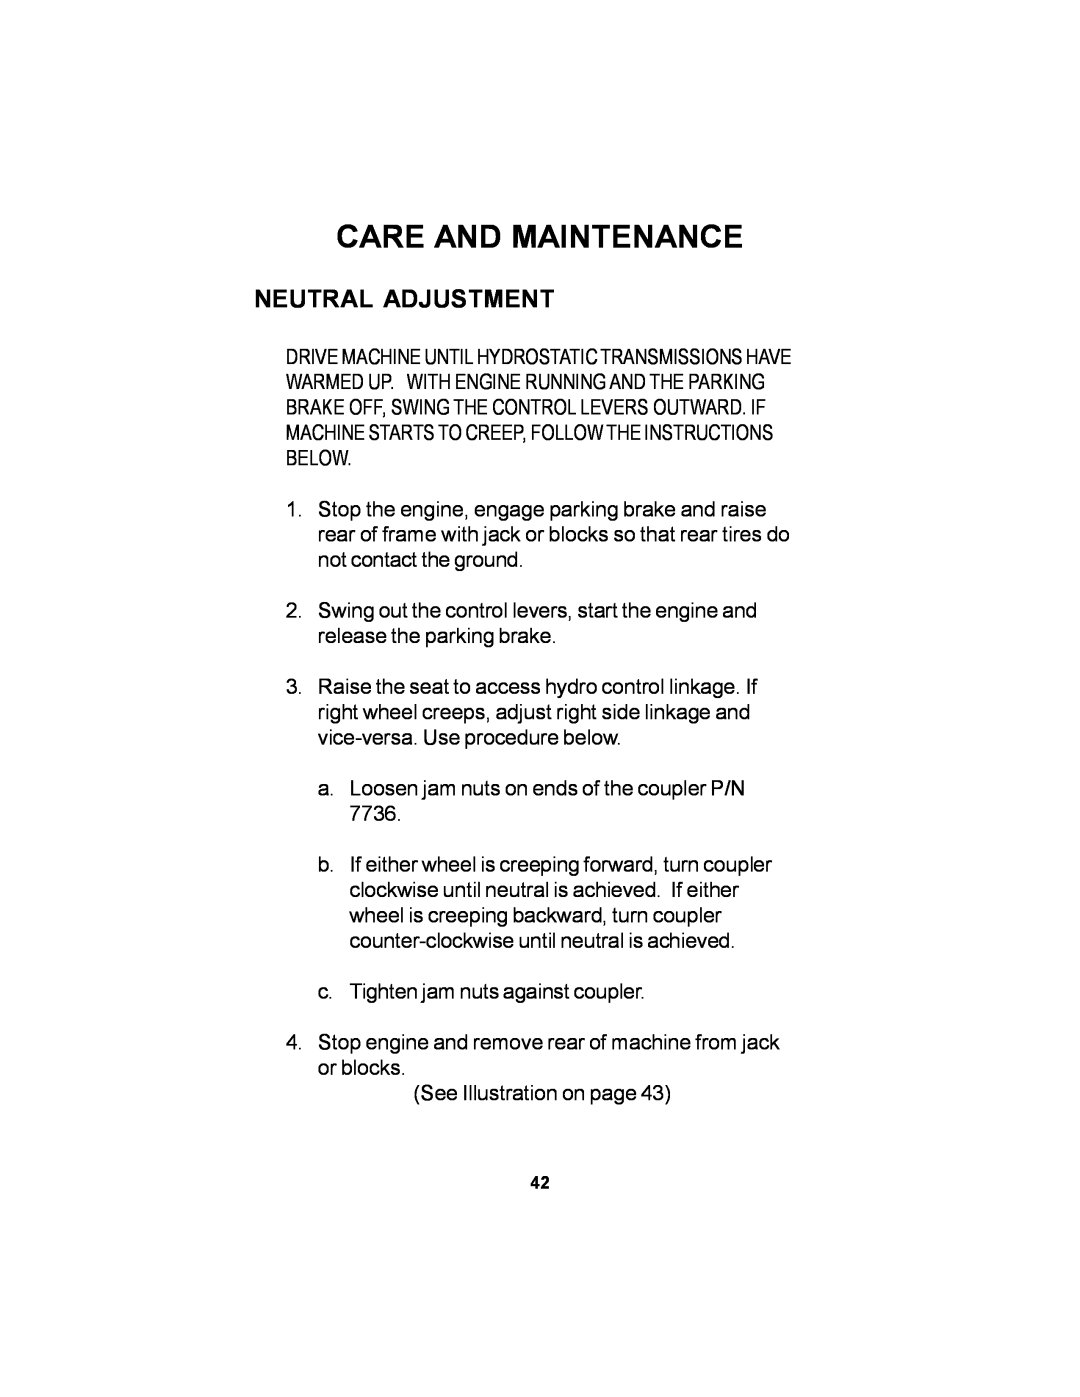 Dixon 36 manual Neutral Adjustment, Care And Maintenance 